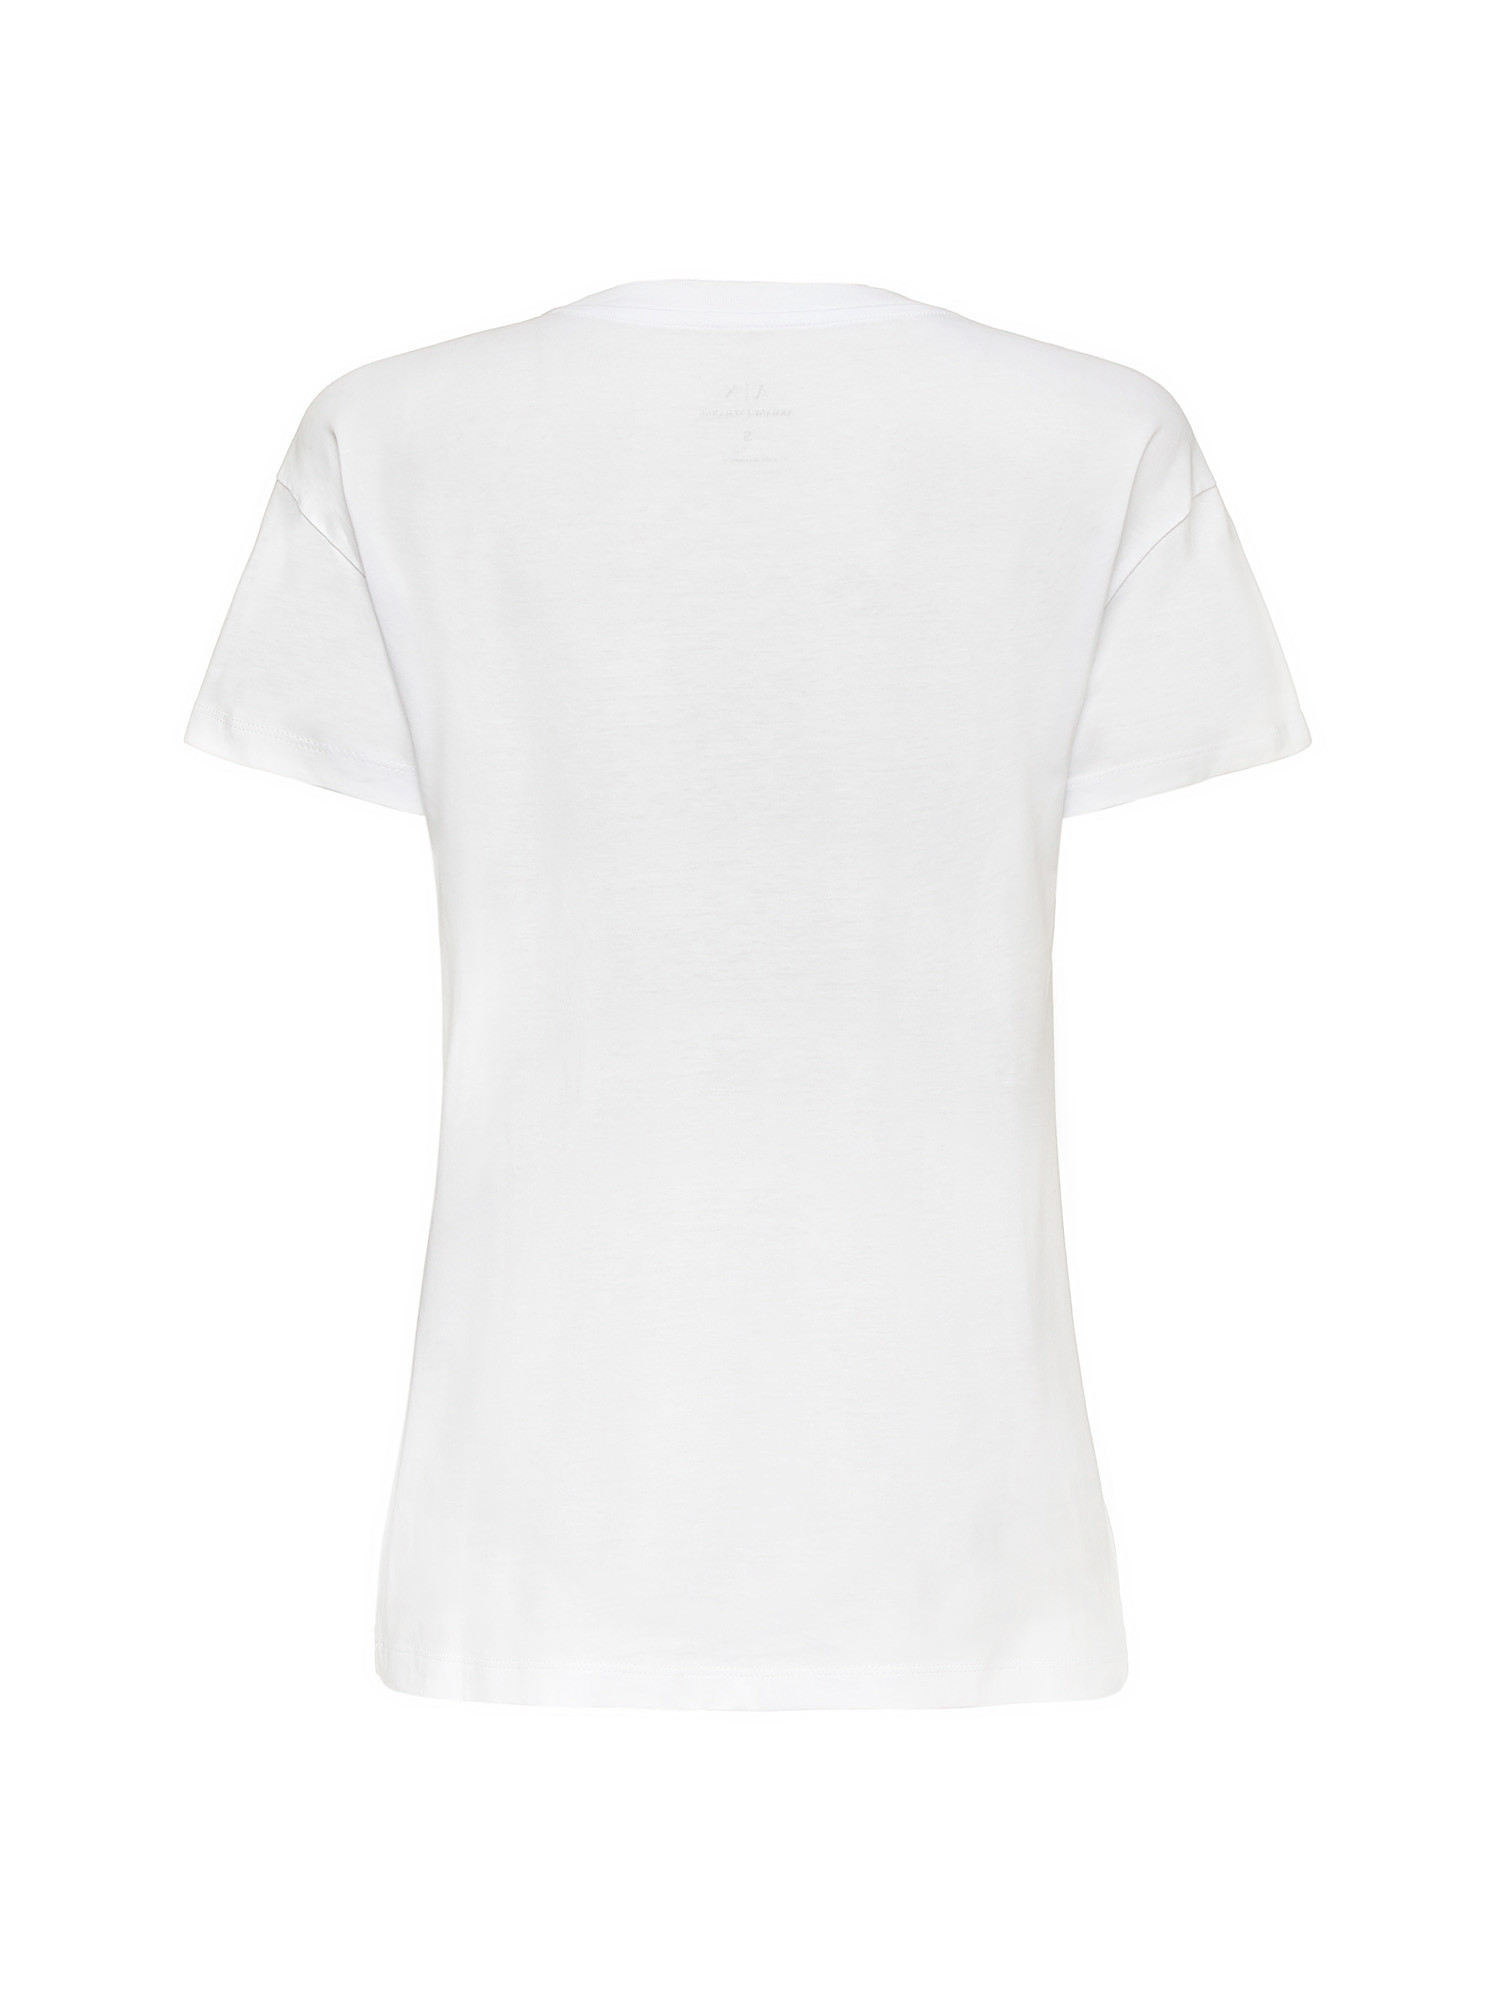 Armani Exchange - T-shirt boyfriend fit in cotone con logo, Bianco, large image number 1